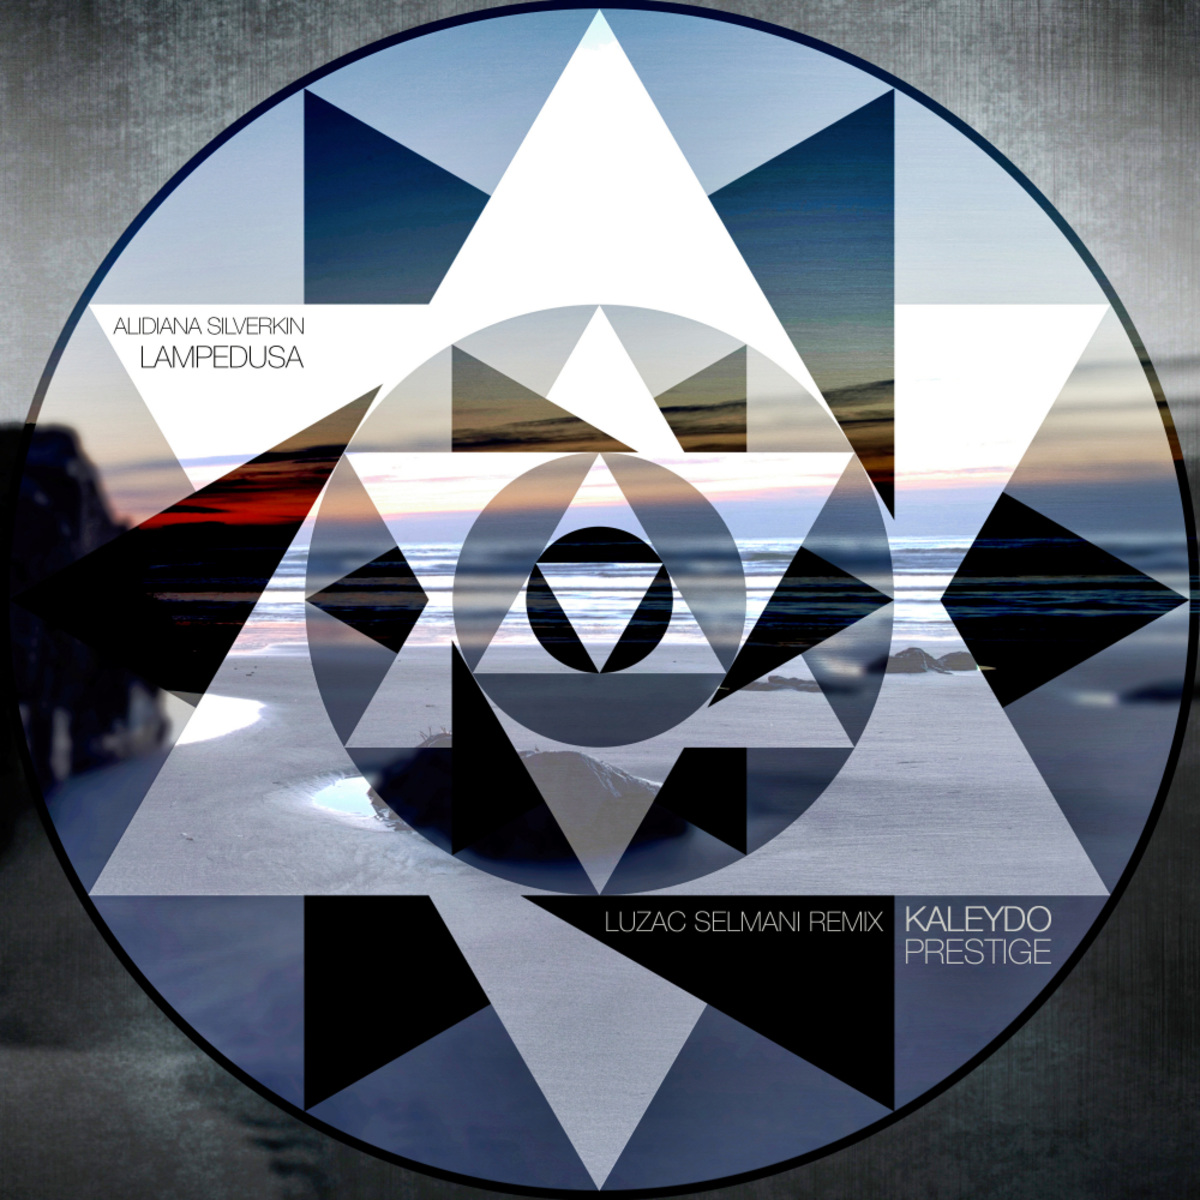 Alidiana Silverkin - Lampedusa (Luzac Selmani Remix) / Kaleydo Prestige